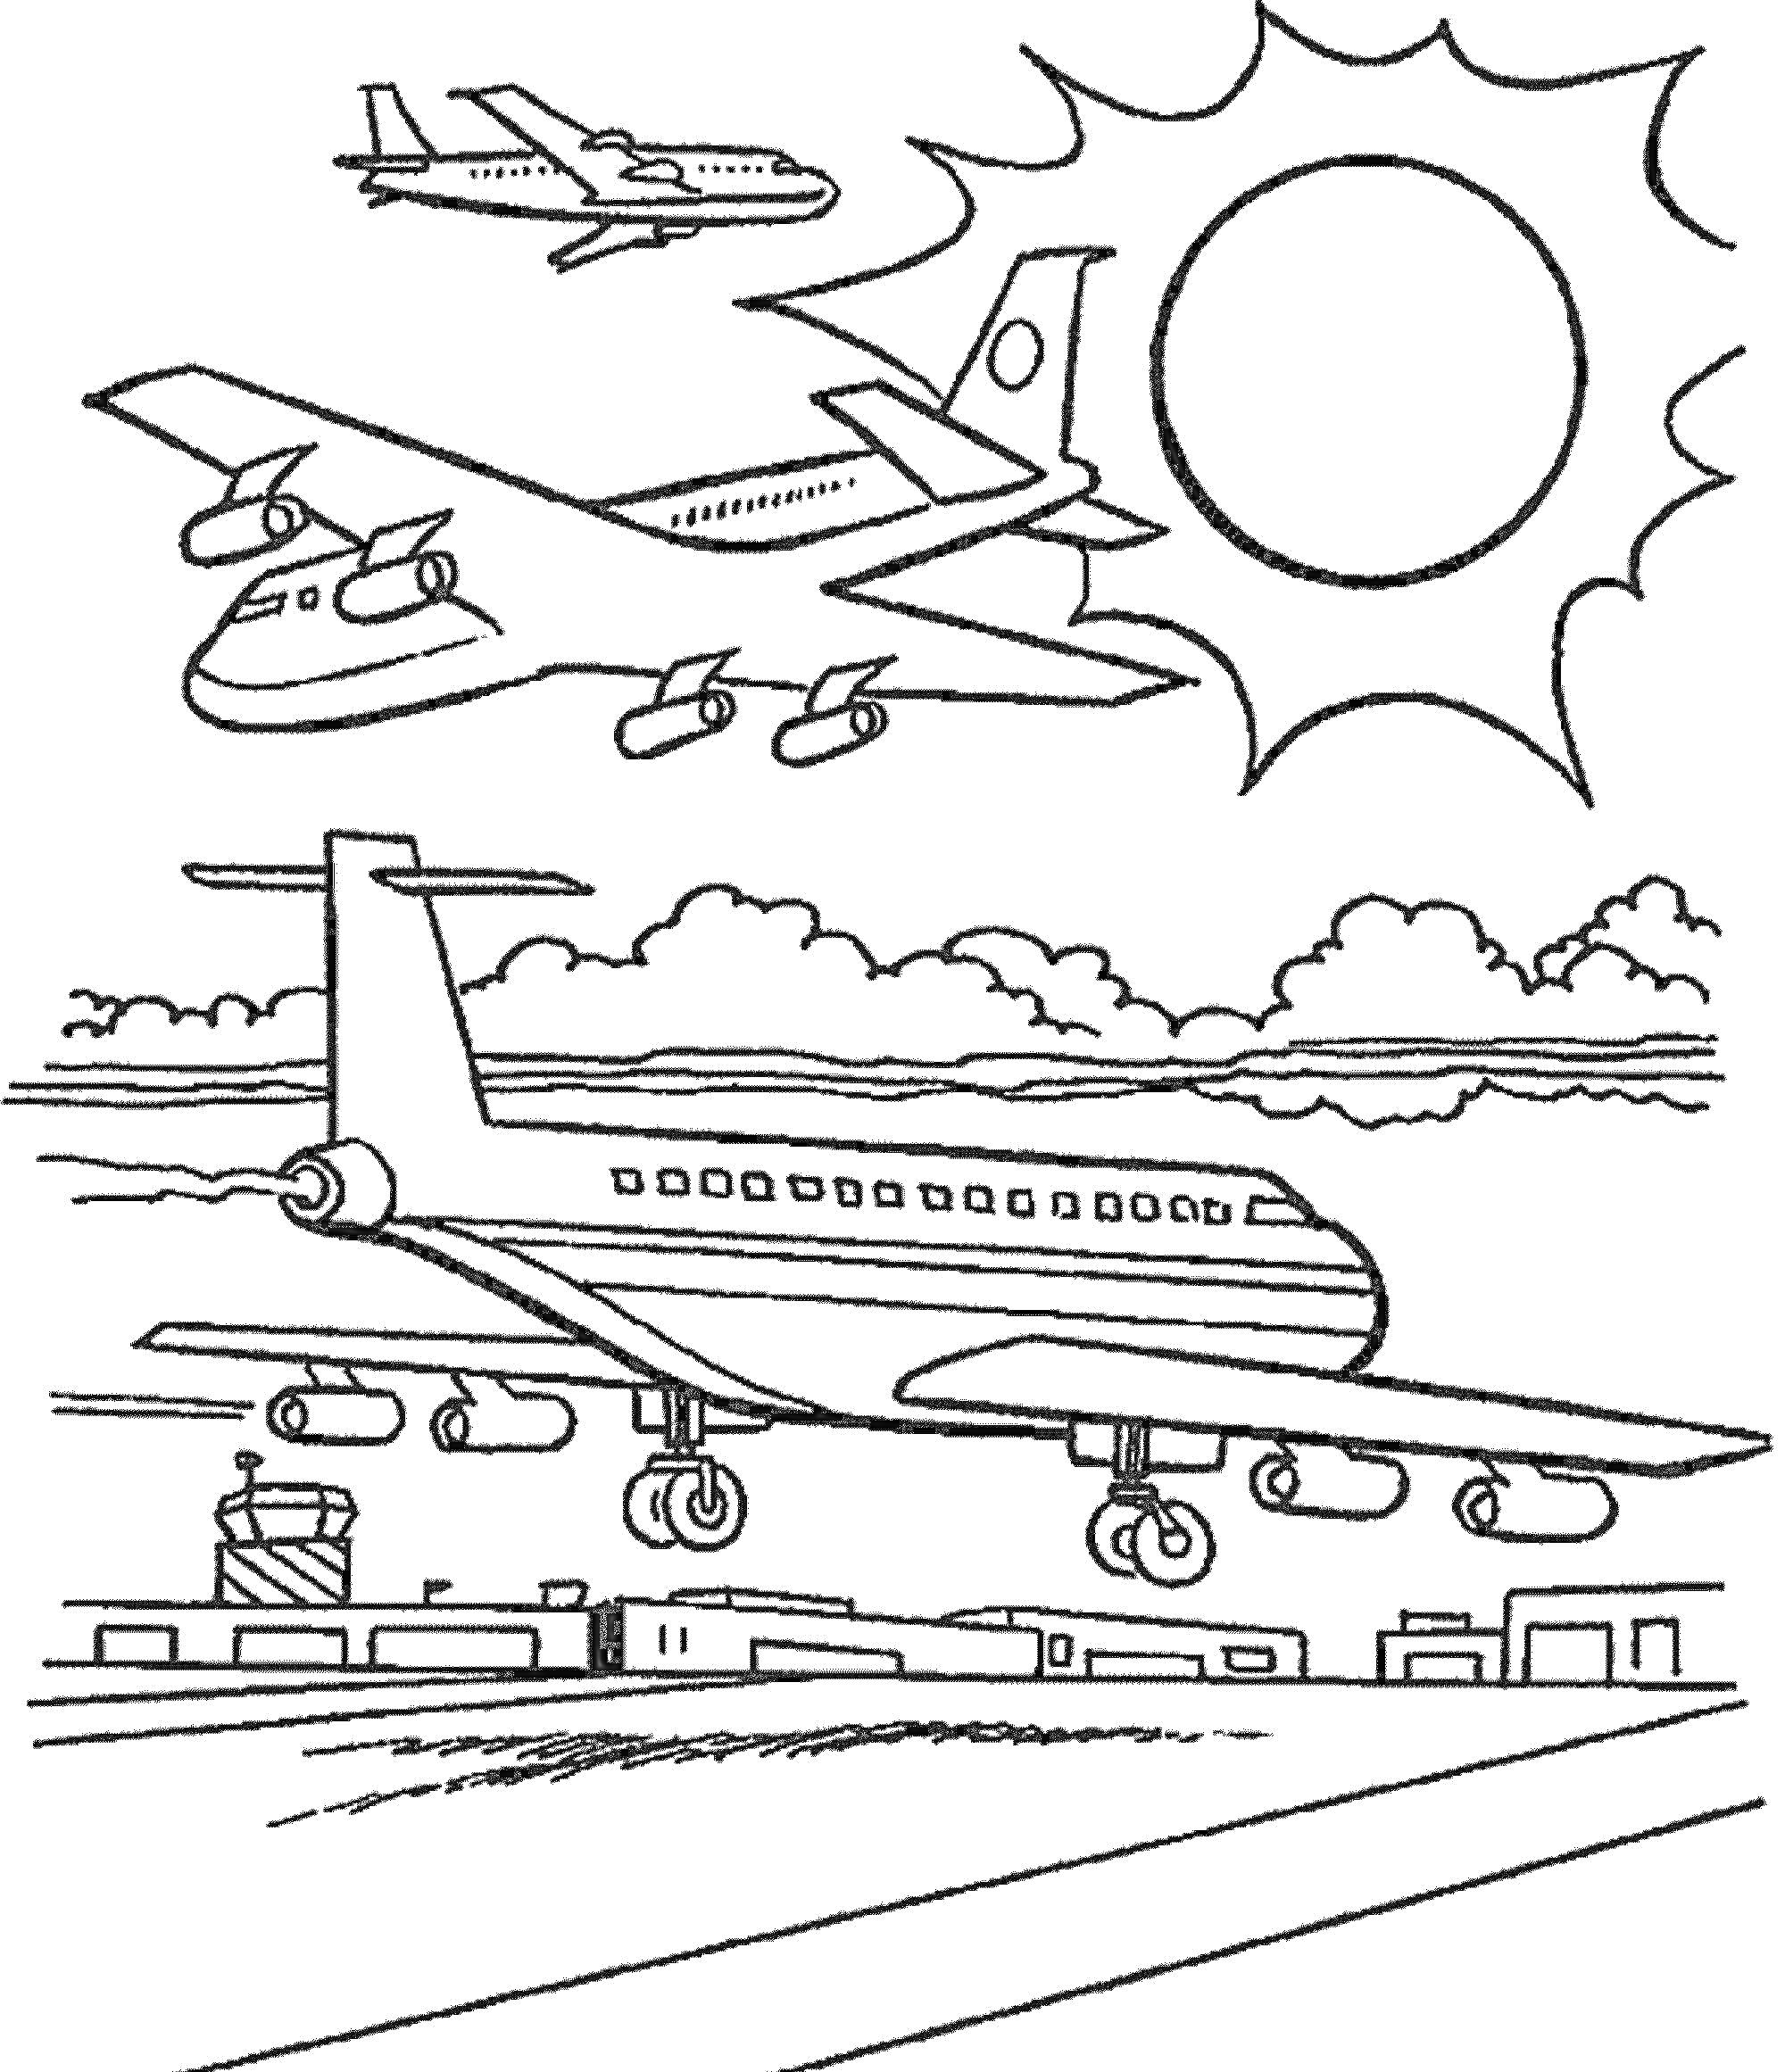 Аэропорт с самолетами в полете и на взлетной полосе, солнце и облака